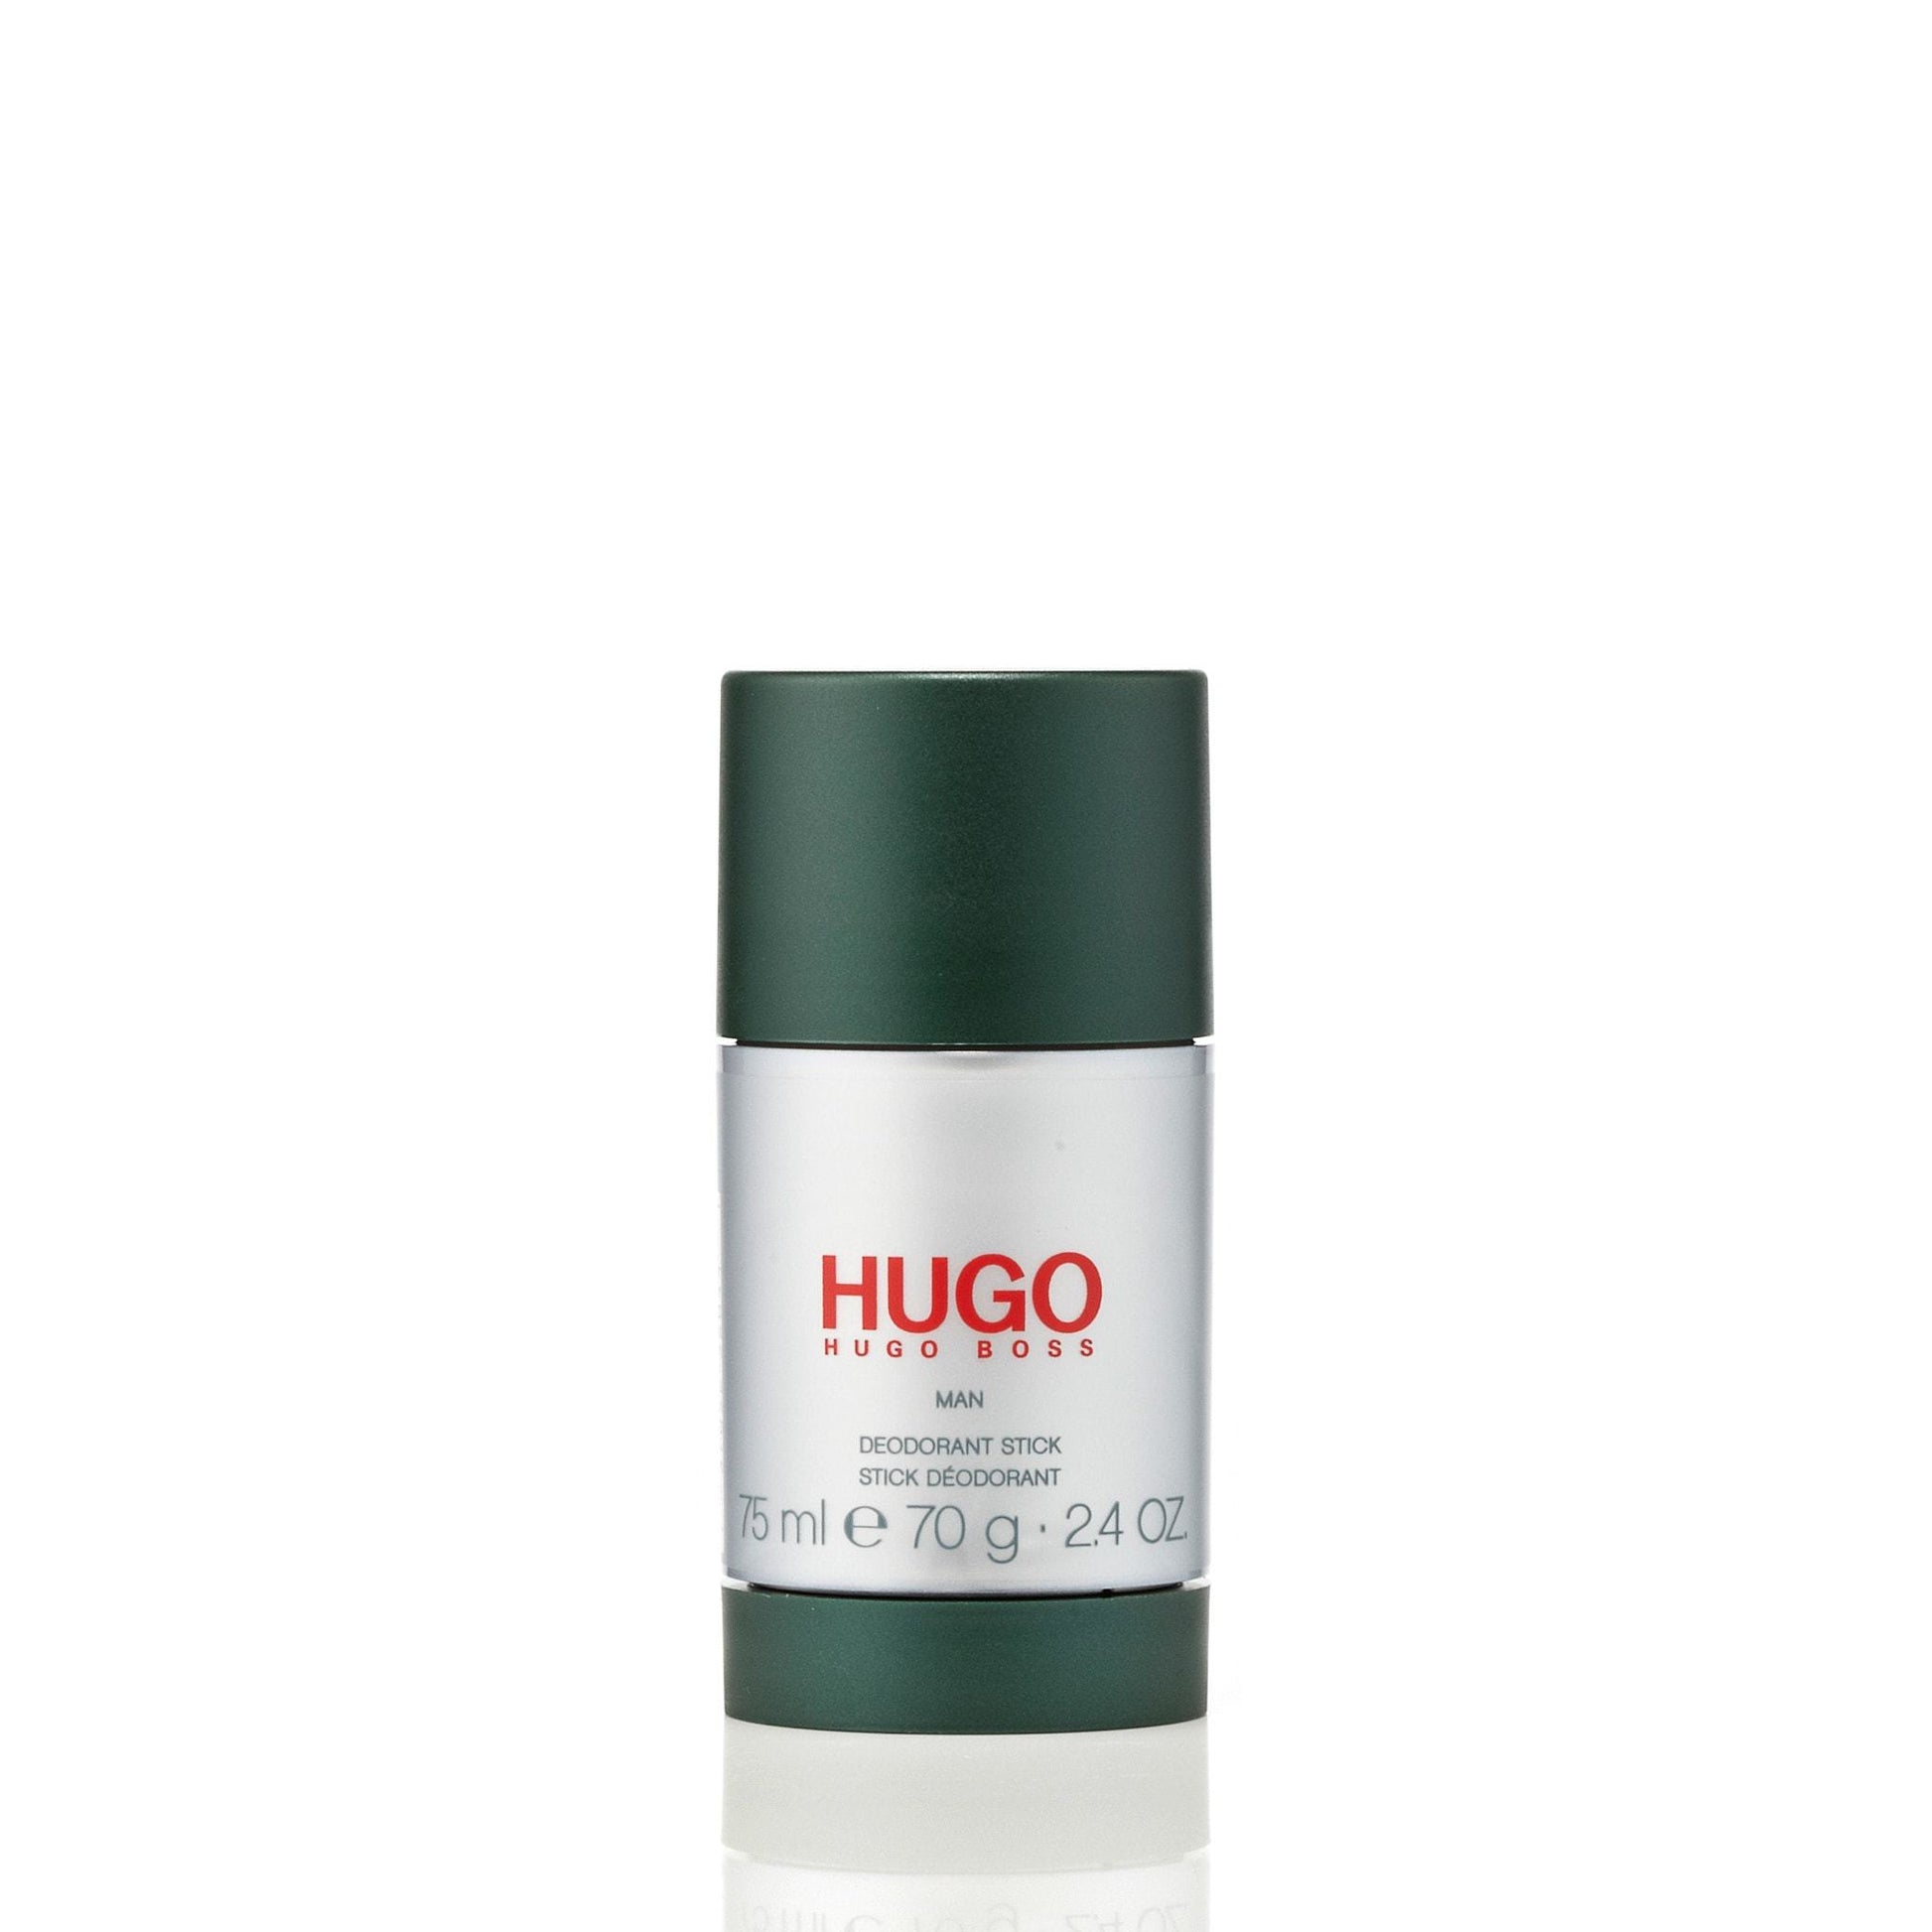 Hugo Green Deodorant for Men by Hugo Boss, Product image 1